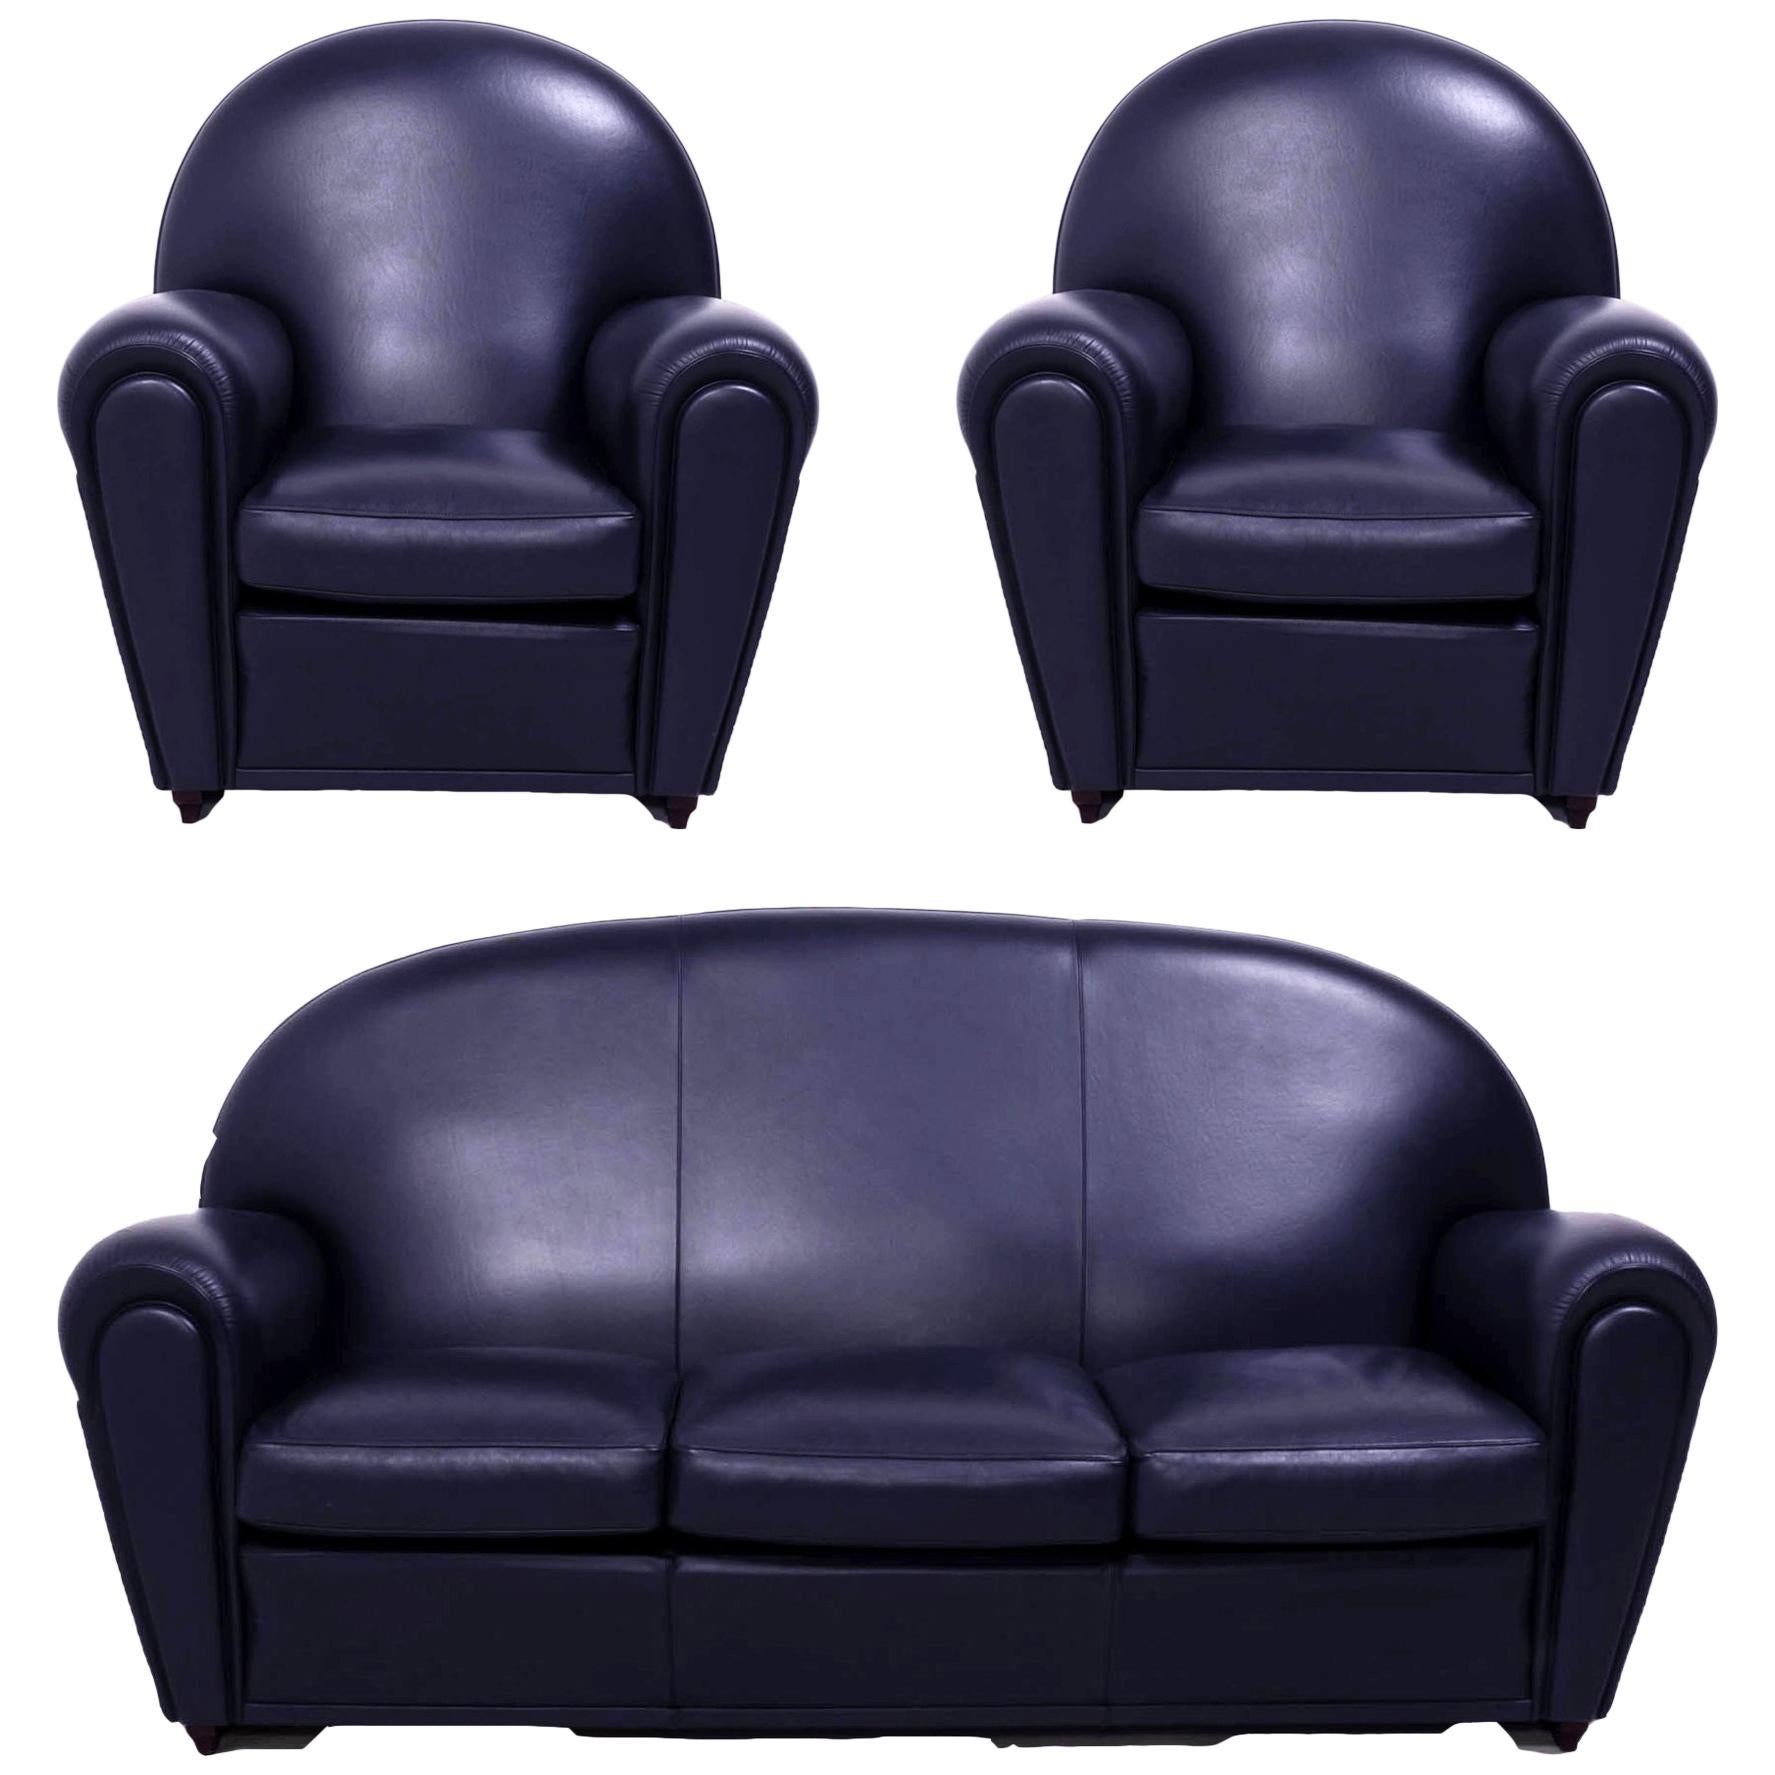 Poltrona Frau, Art Deco Style Dark Blue Leather Sofa and 2 Armchairs Set